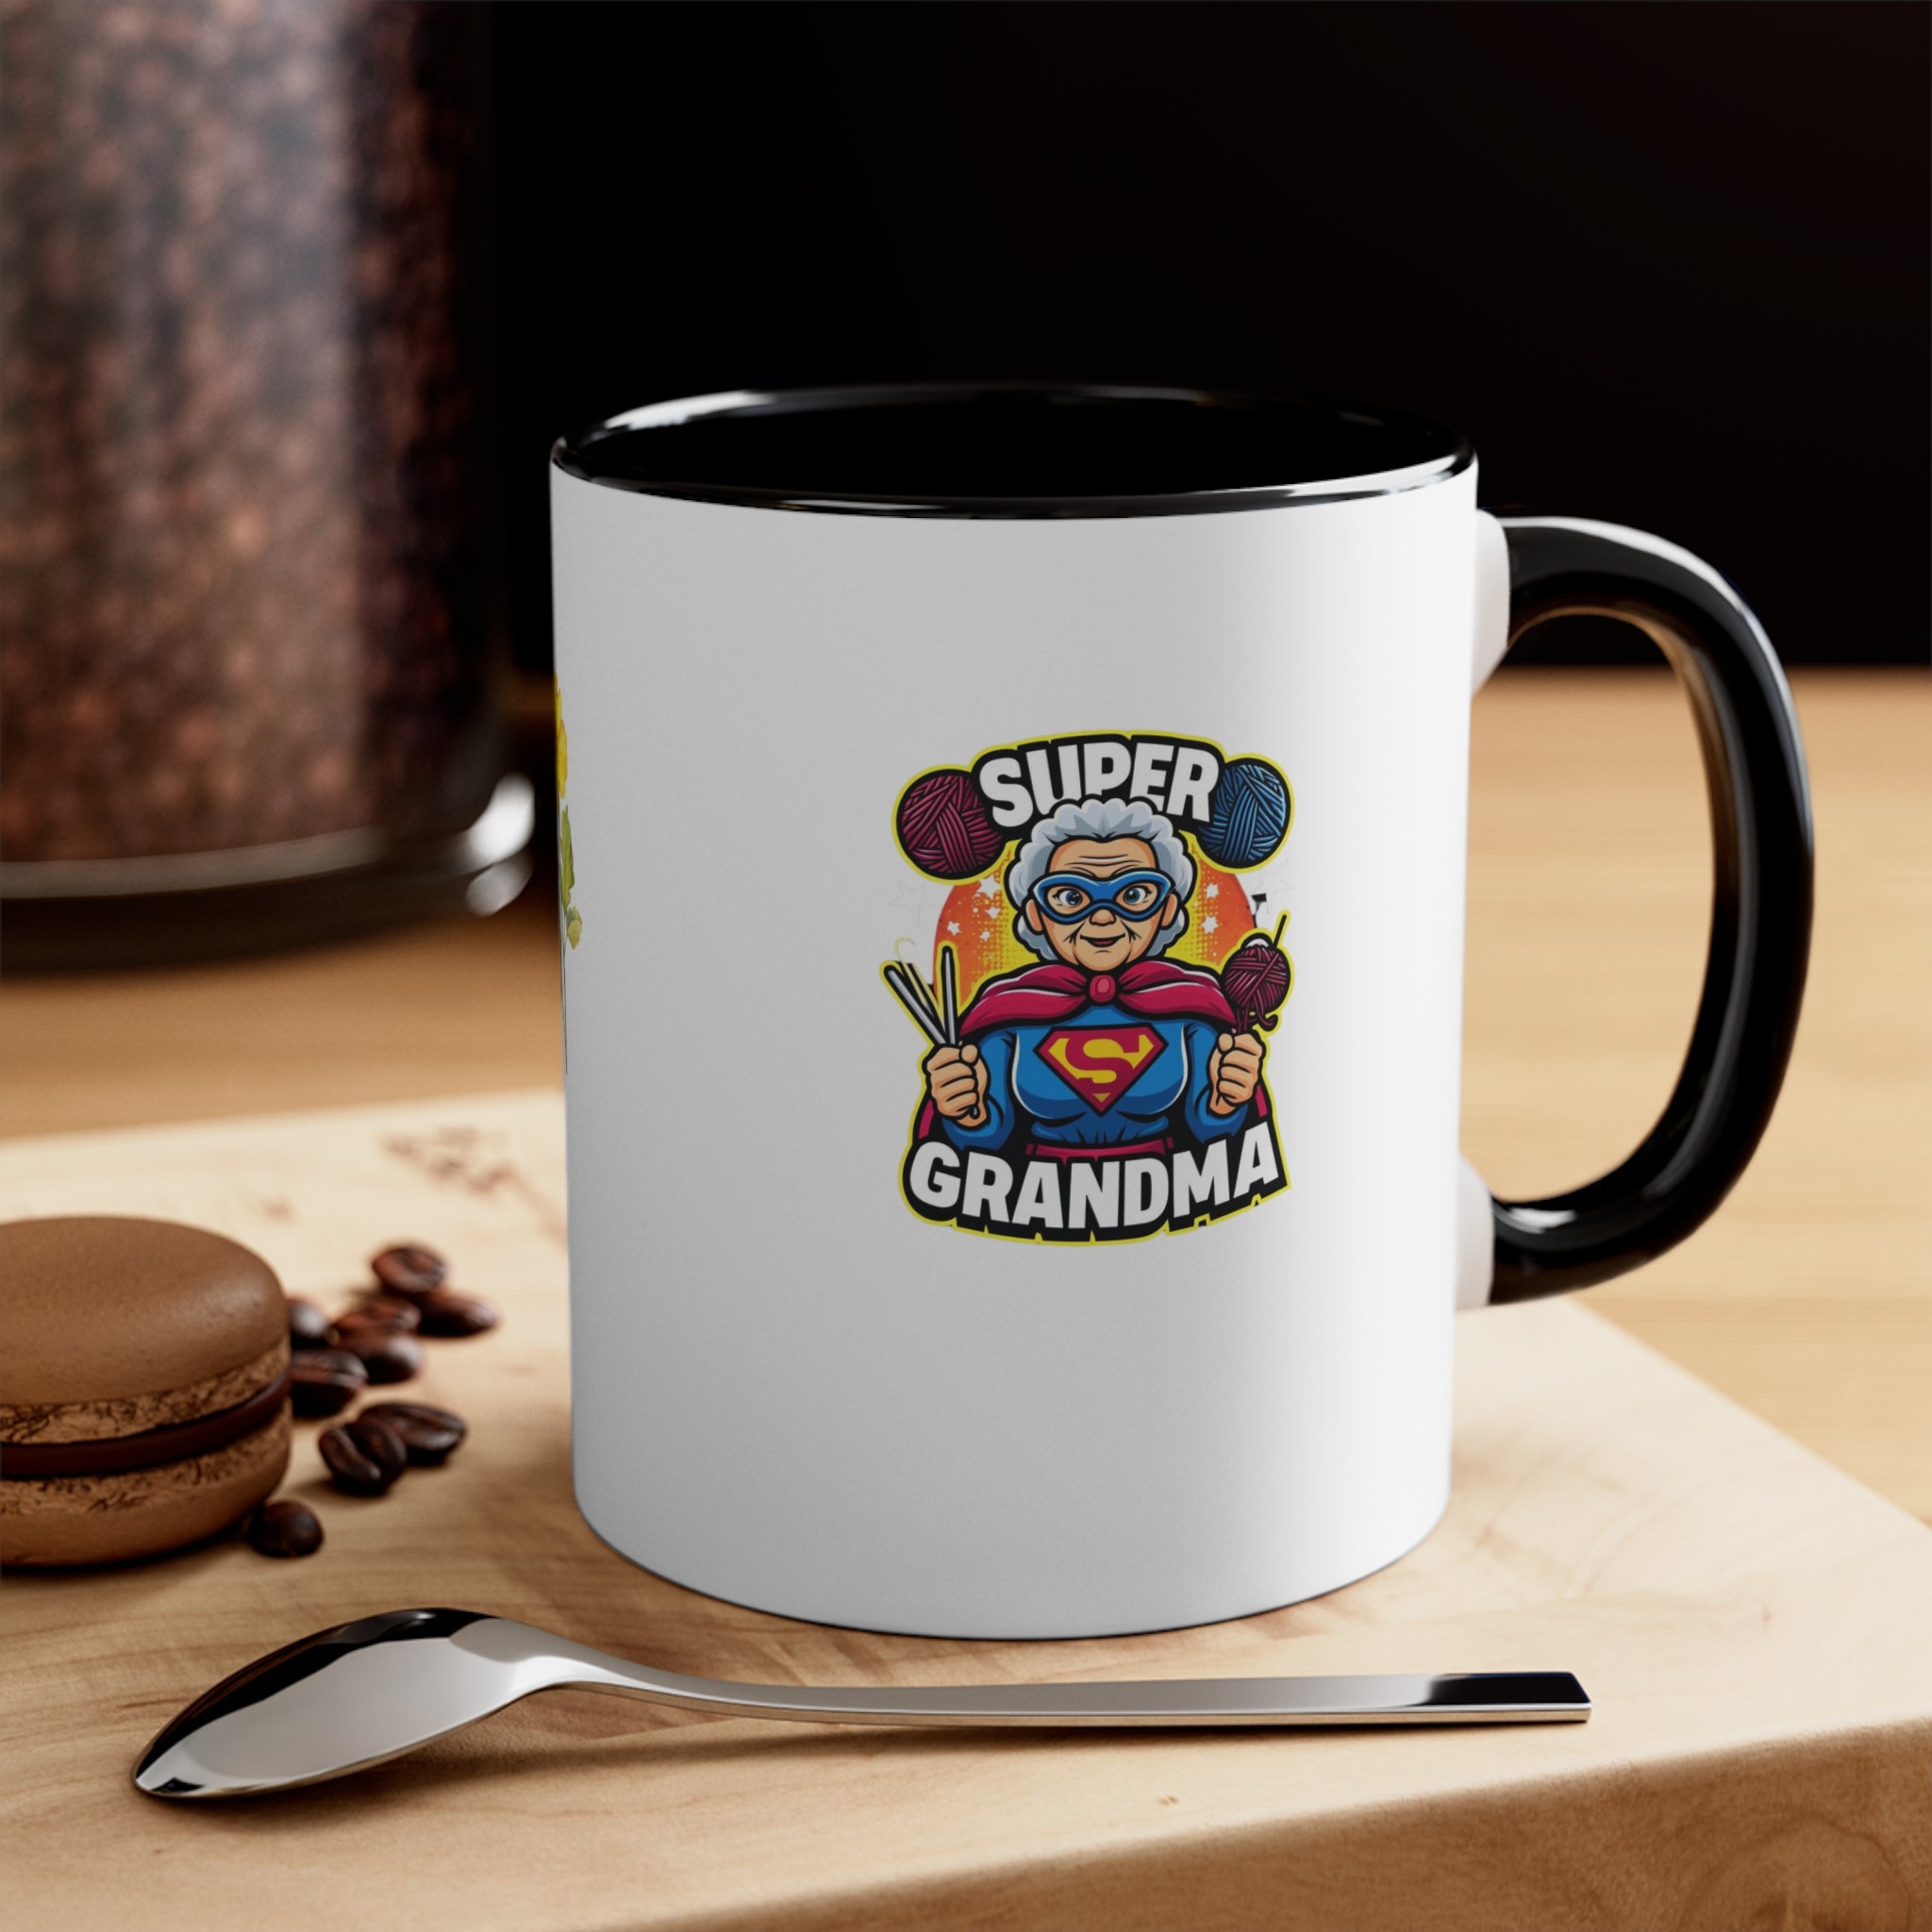 Super Grandma Accent Coffee Mug, 11oz